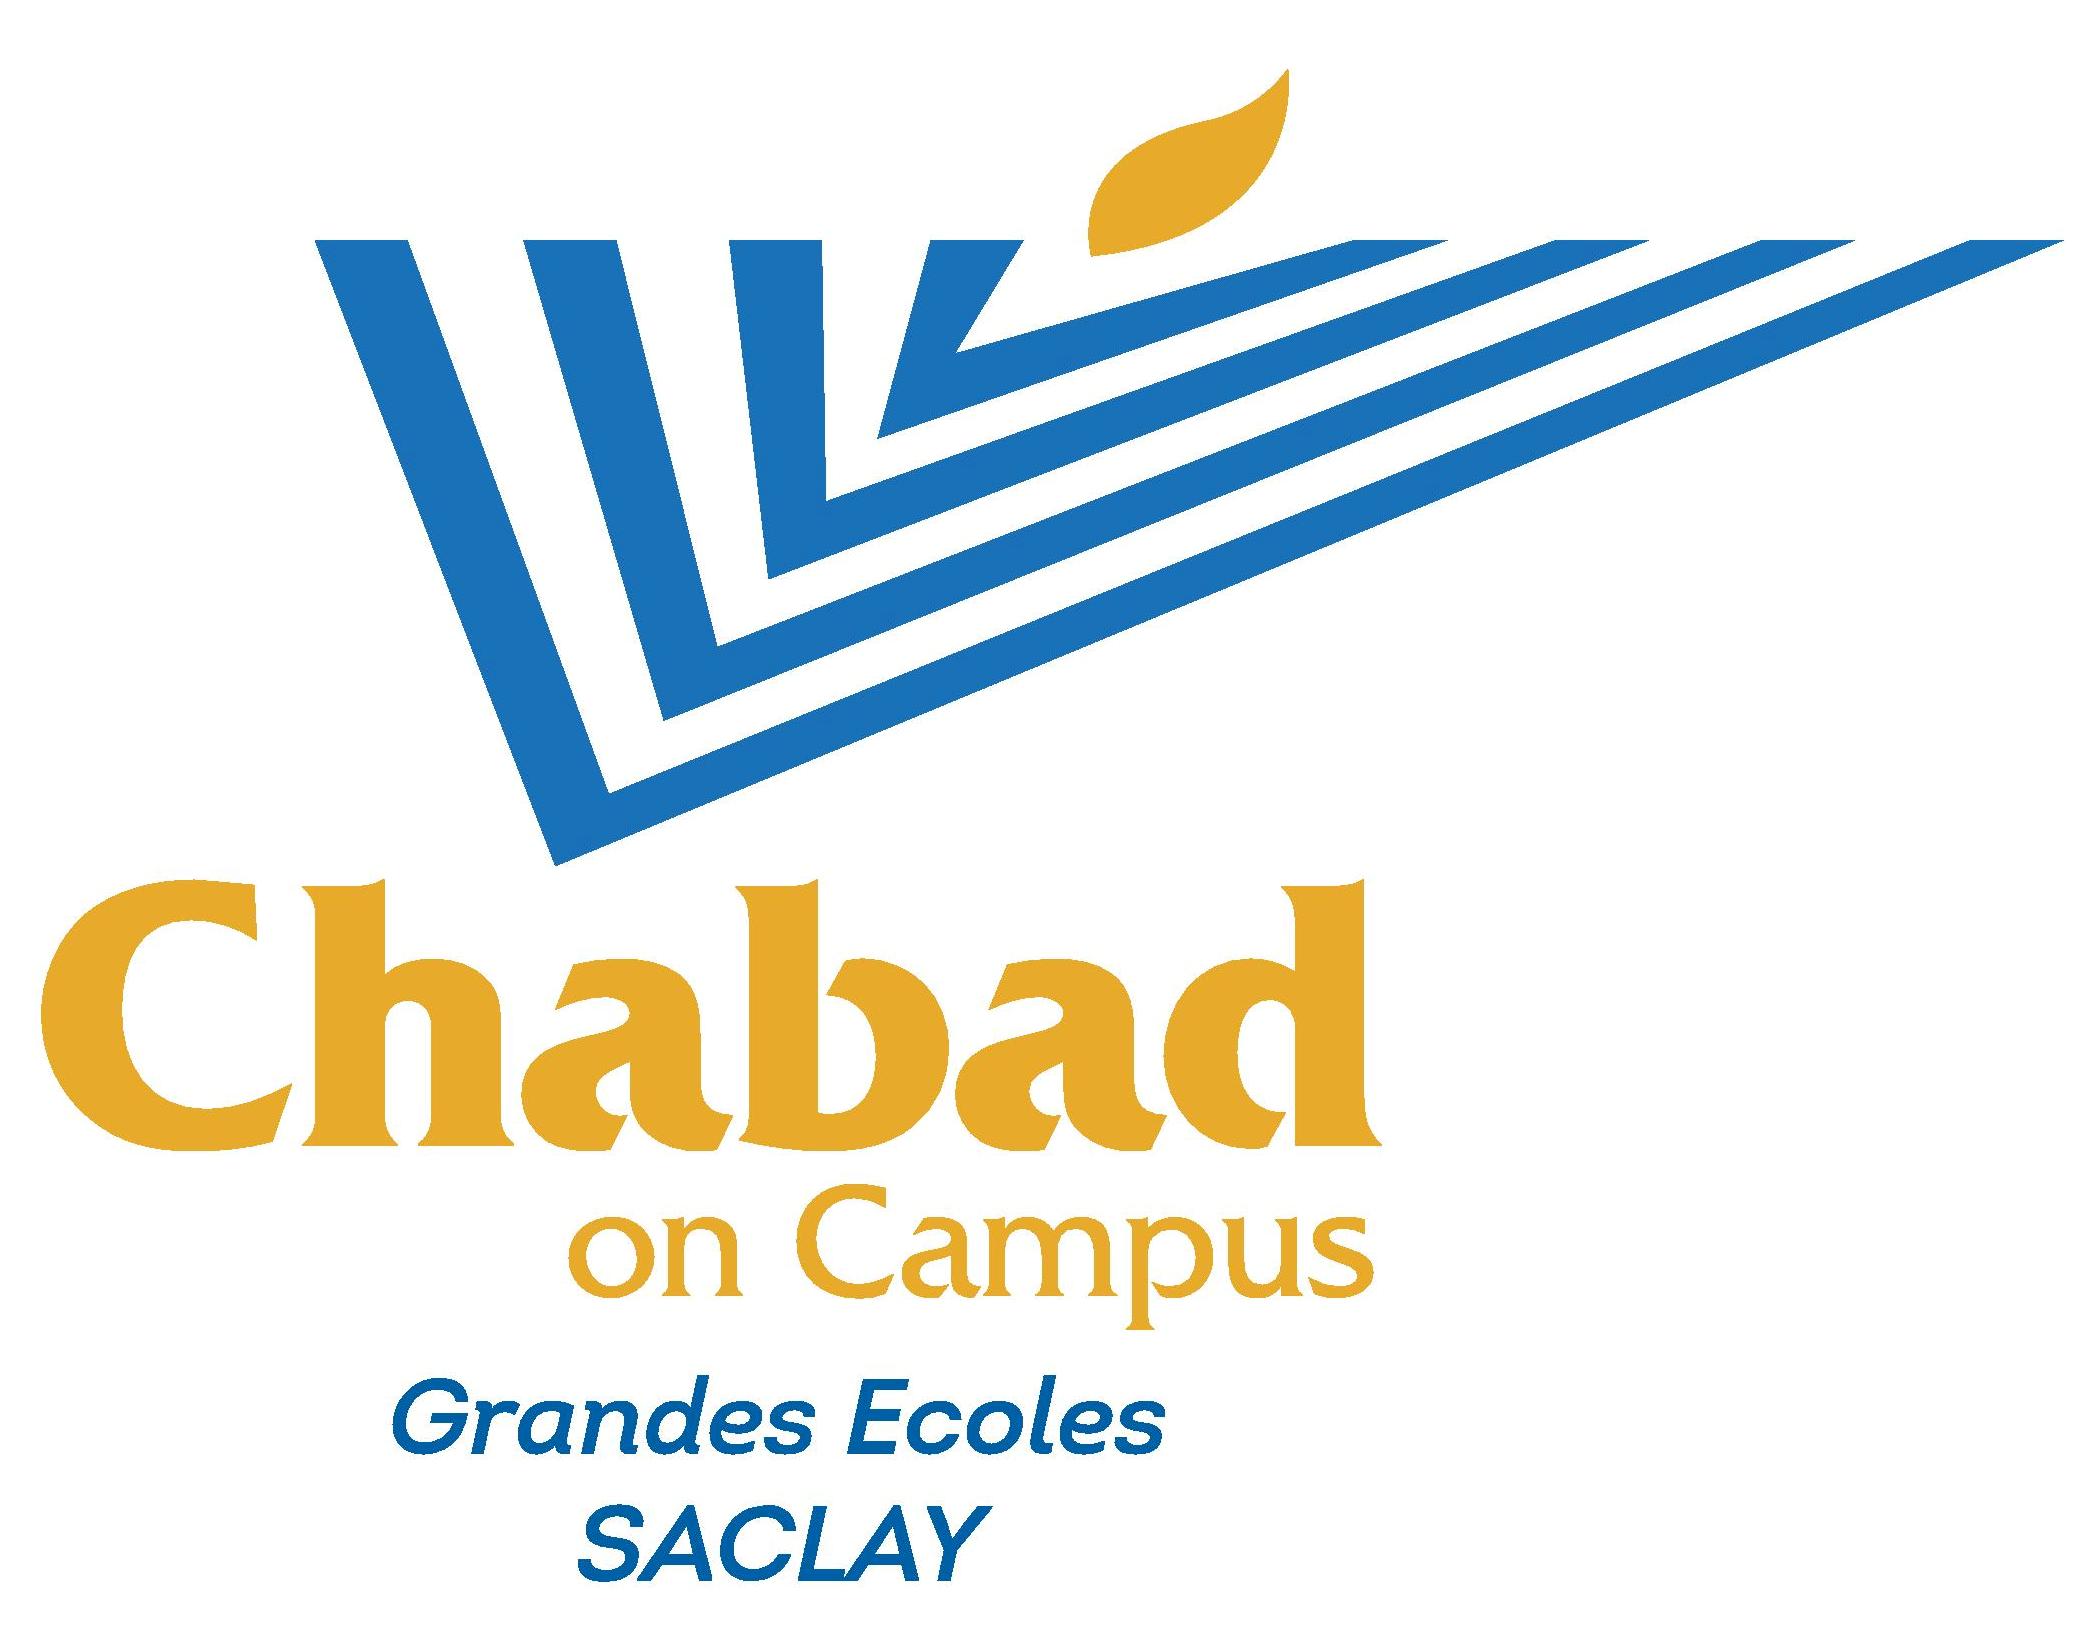 Chabad on Campus Saclay